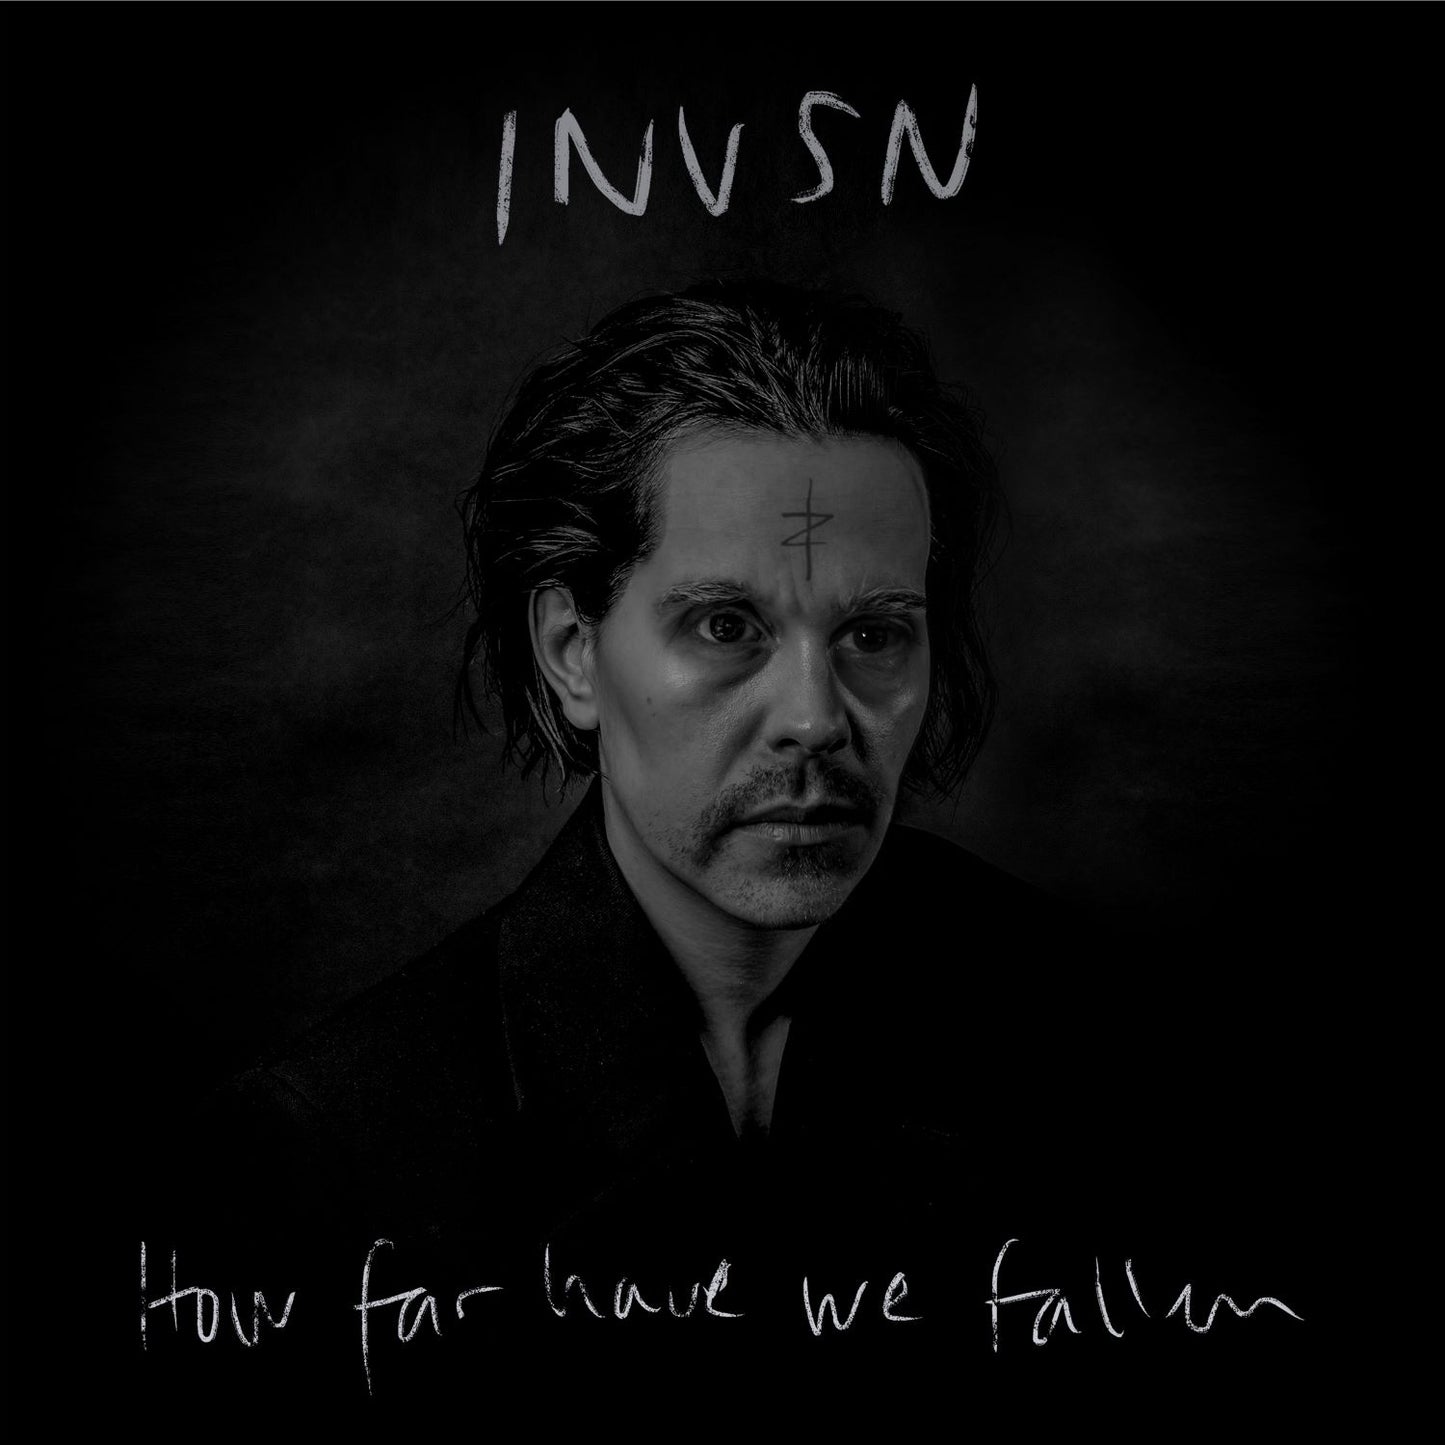 INVSN - How Far Have We Fallen - 12"